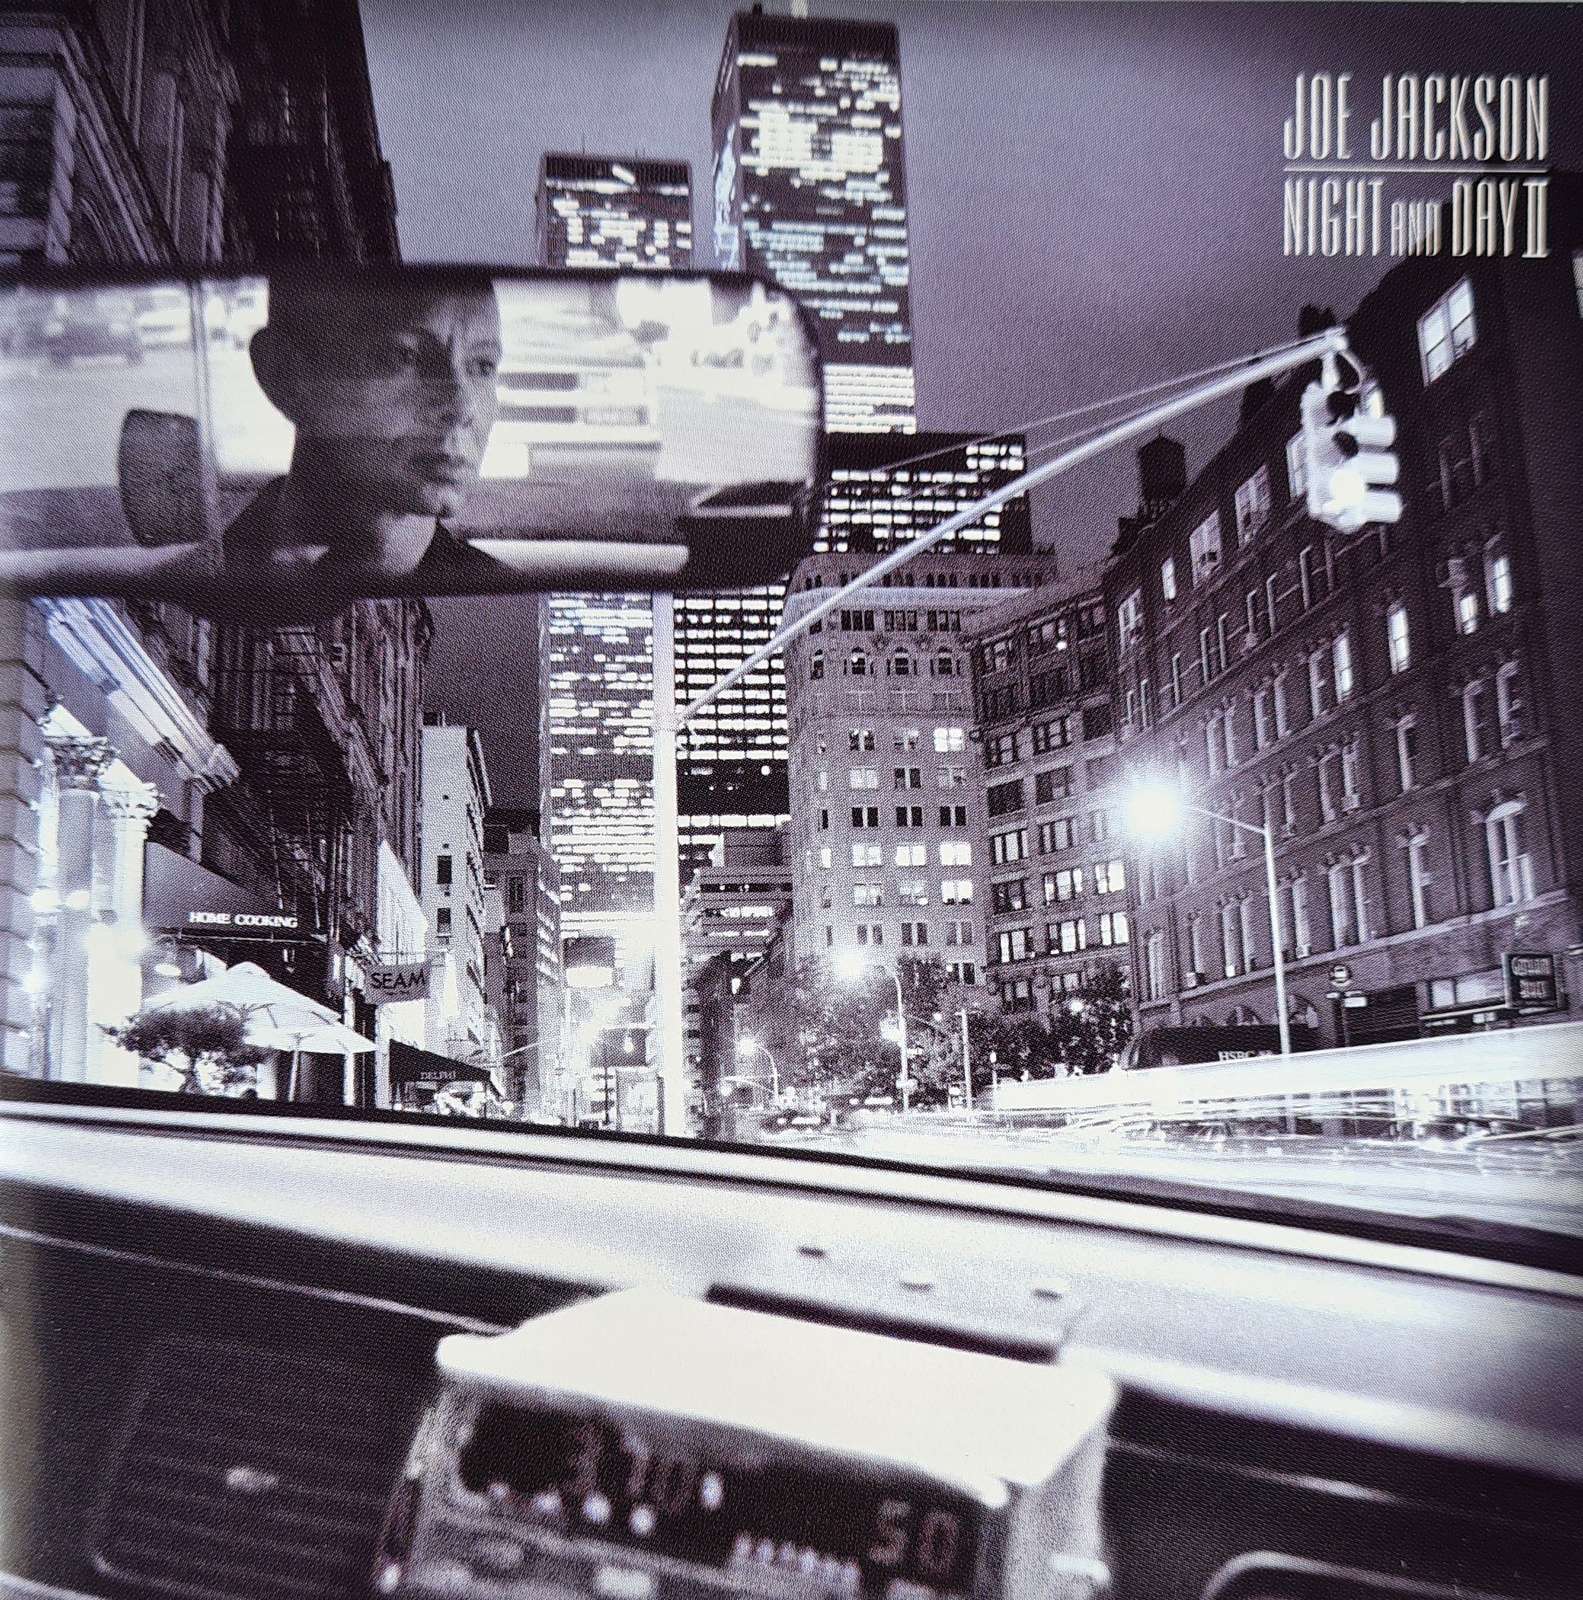 Joe Jackson - Night and Day II (CD)